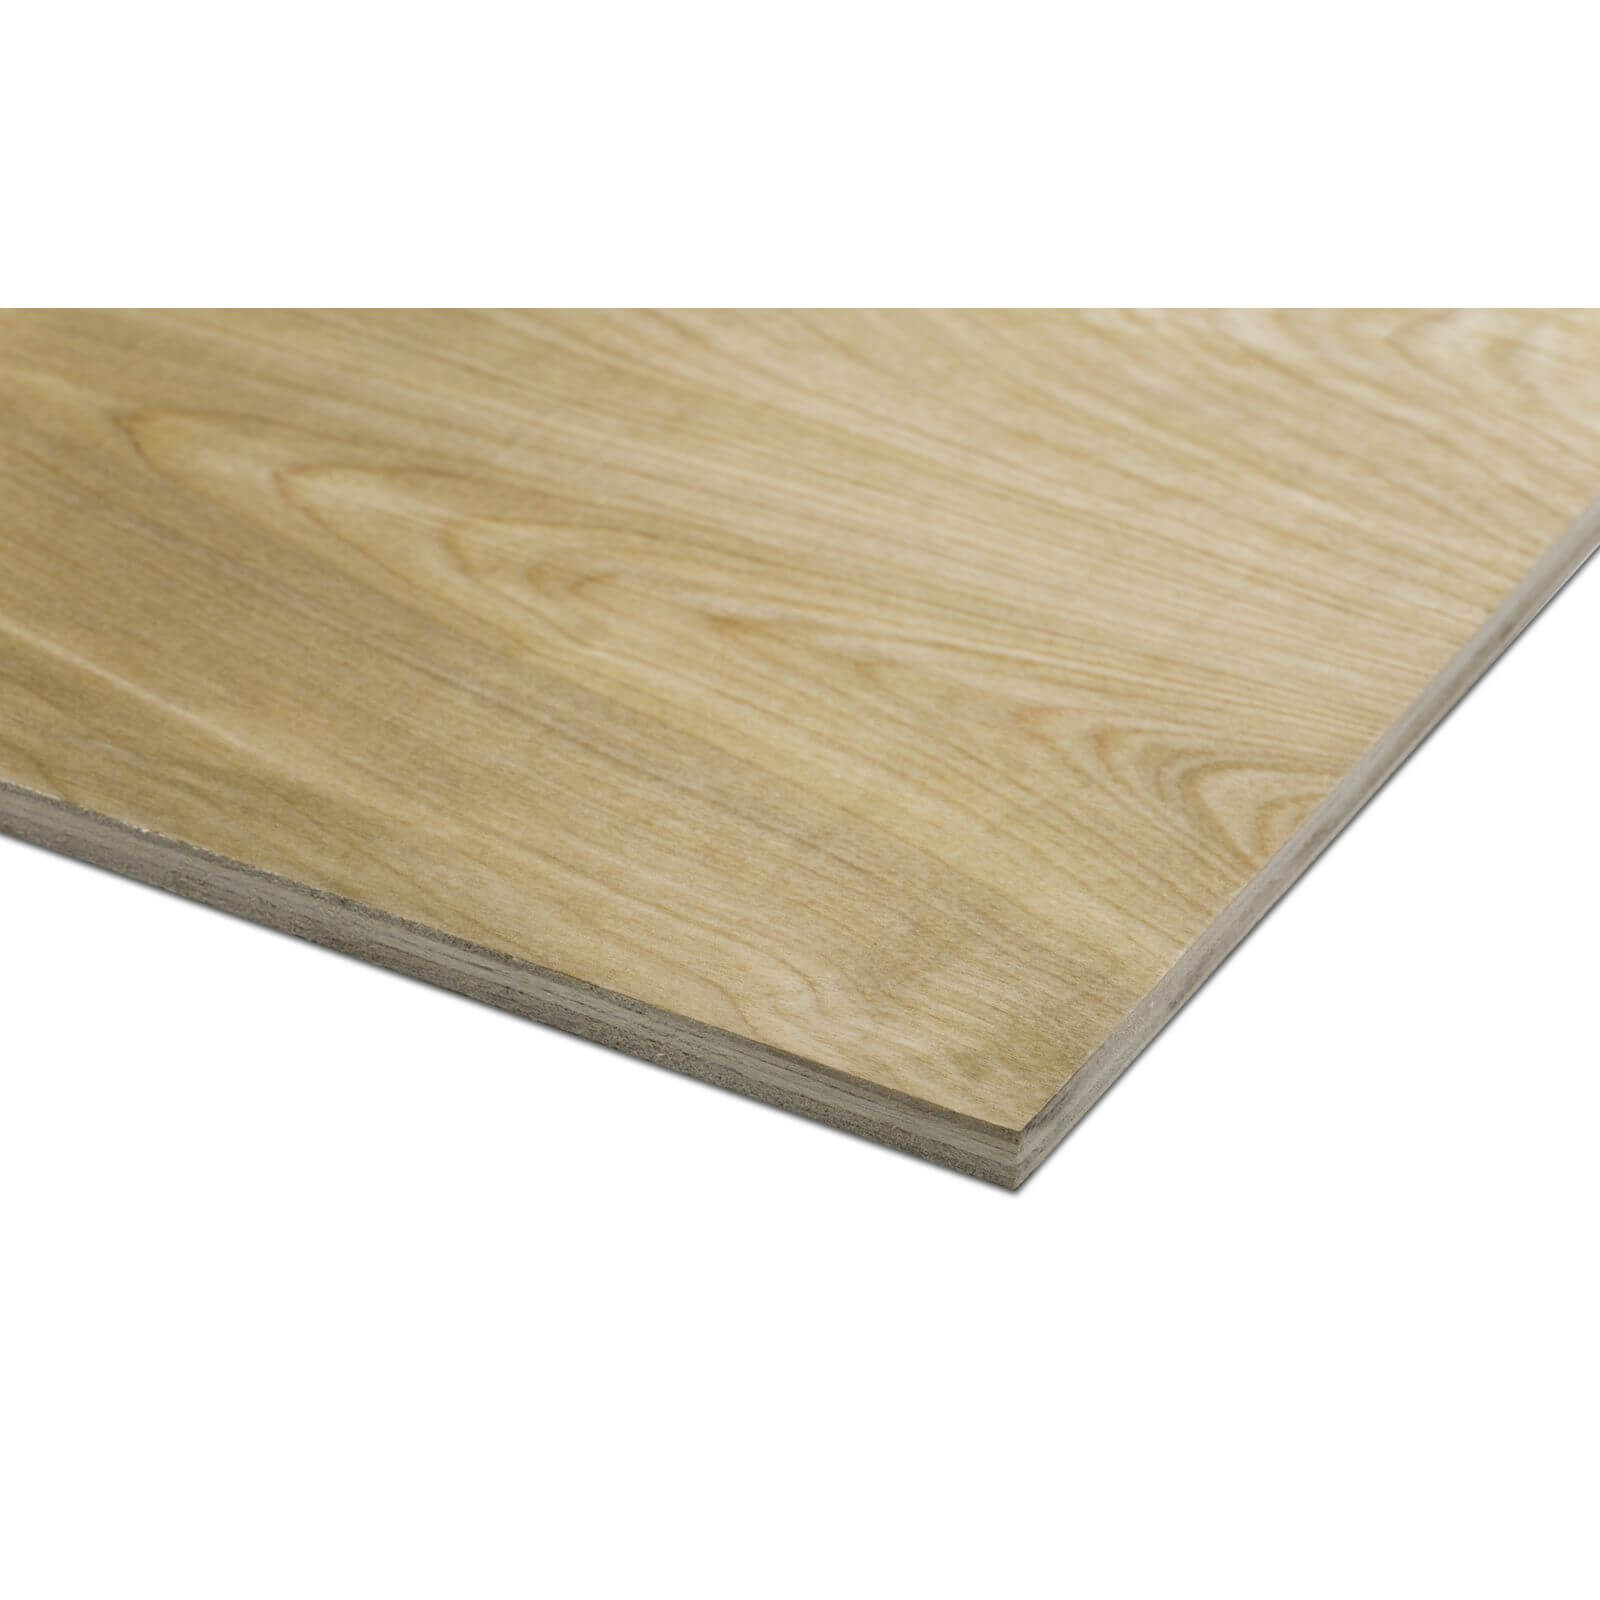 Metsa Hardwood Plywood Board 1.8m (1829 x 607 x 9mm)